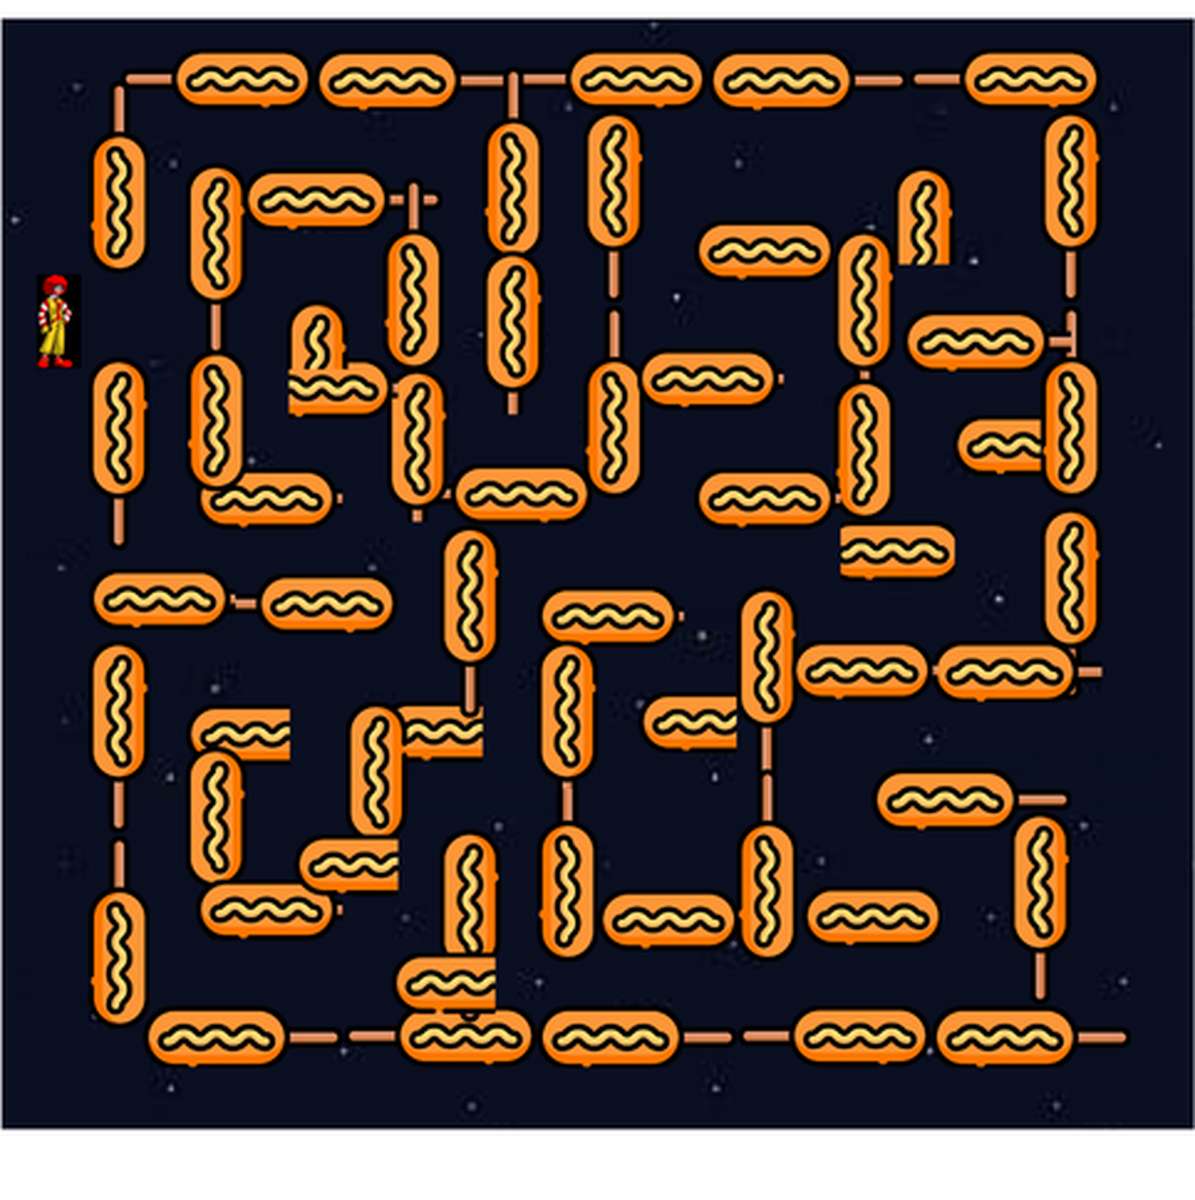 Ronald McDonald Online-Puzzle vom Foto